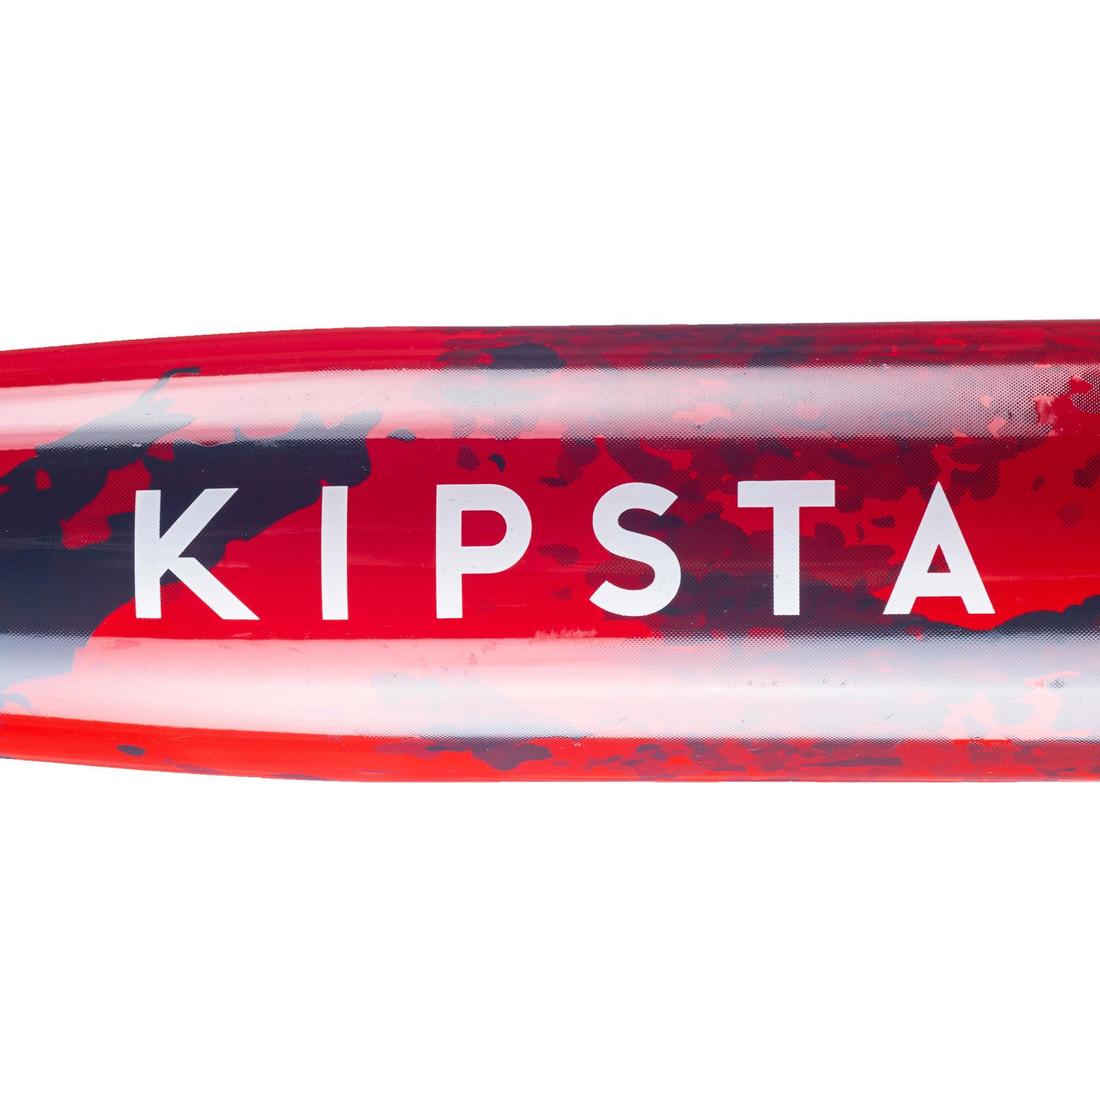 KIPSTA(キプスタ) 野球 バット 金属 32/34インチ BA550